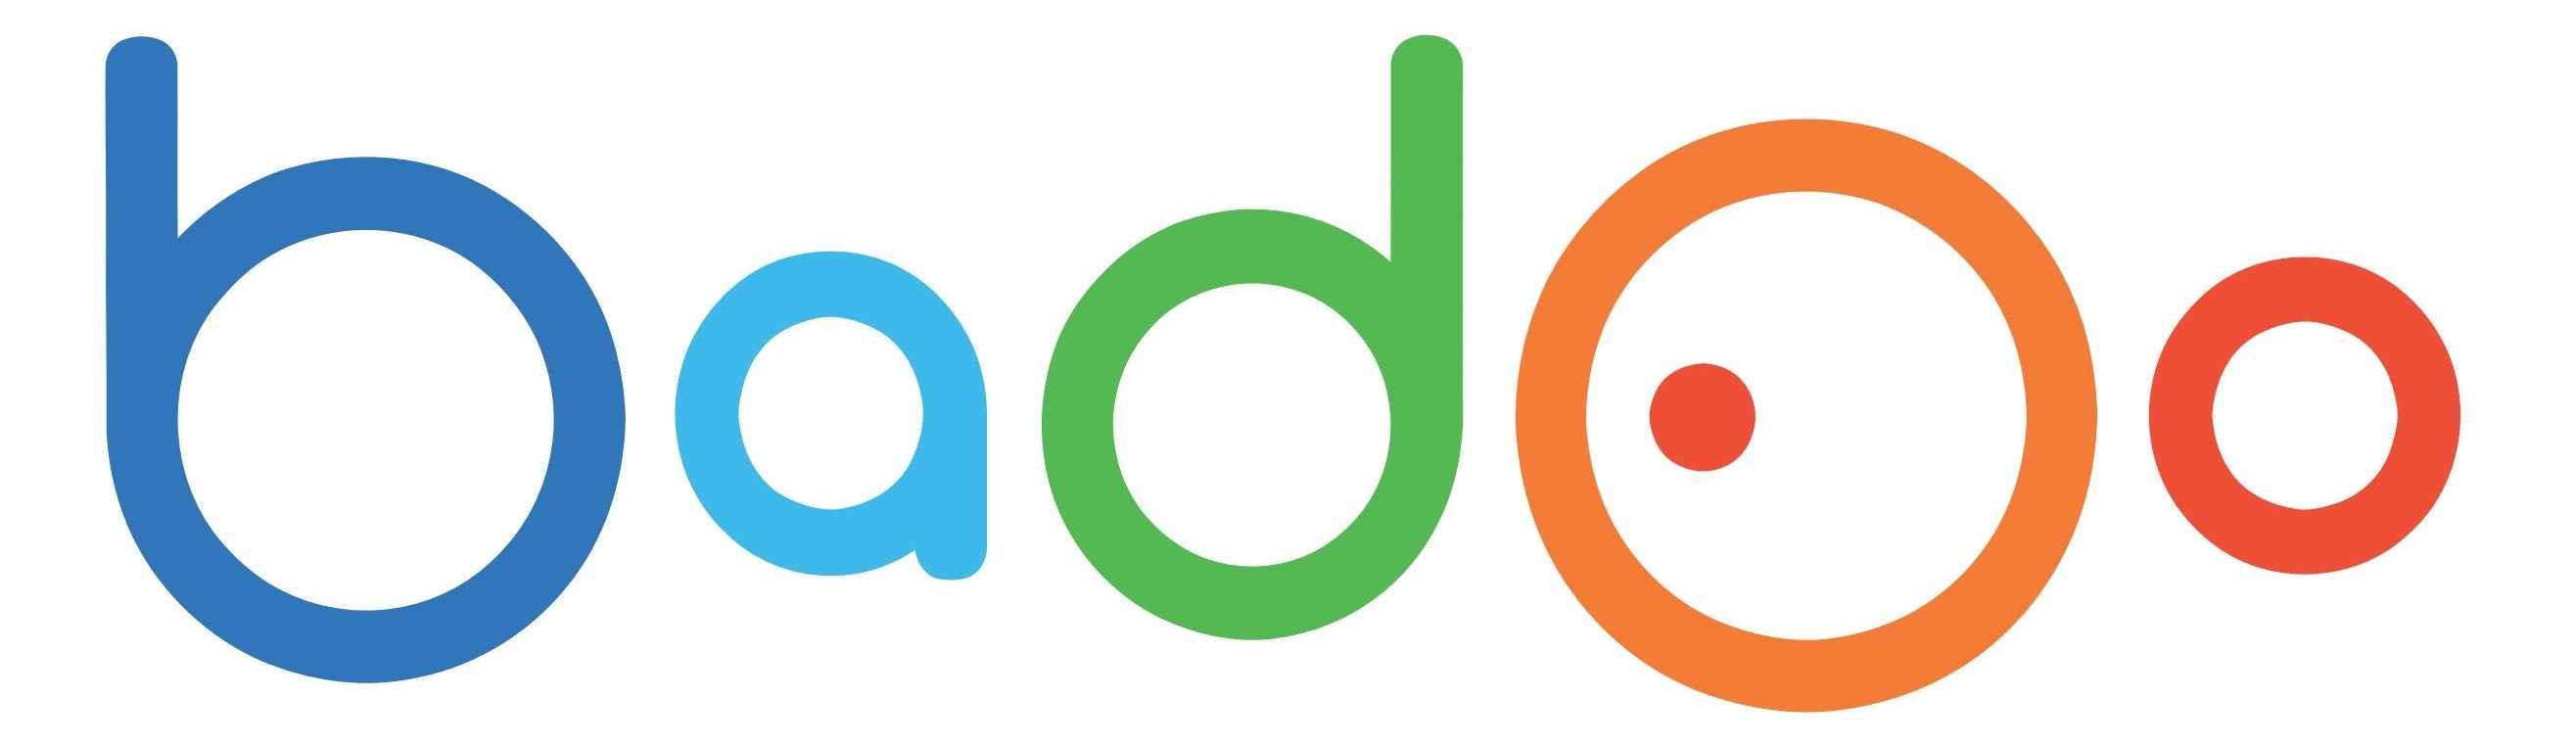 Download badoo